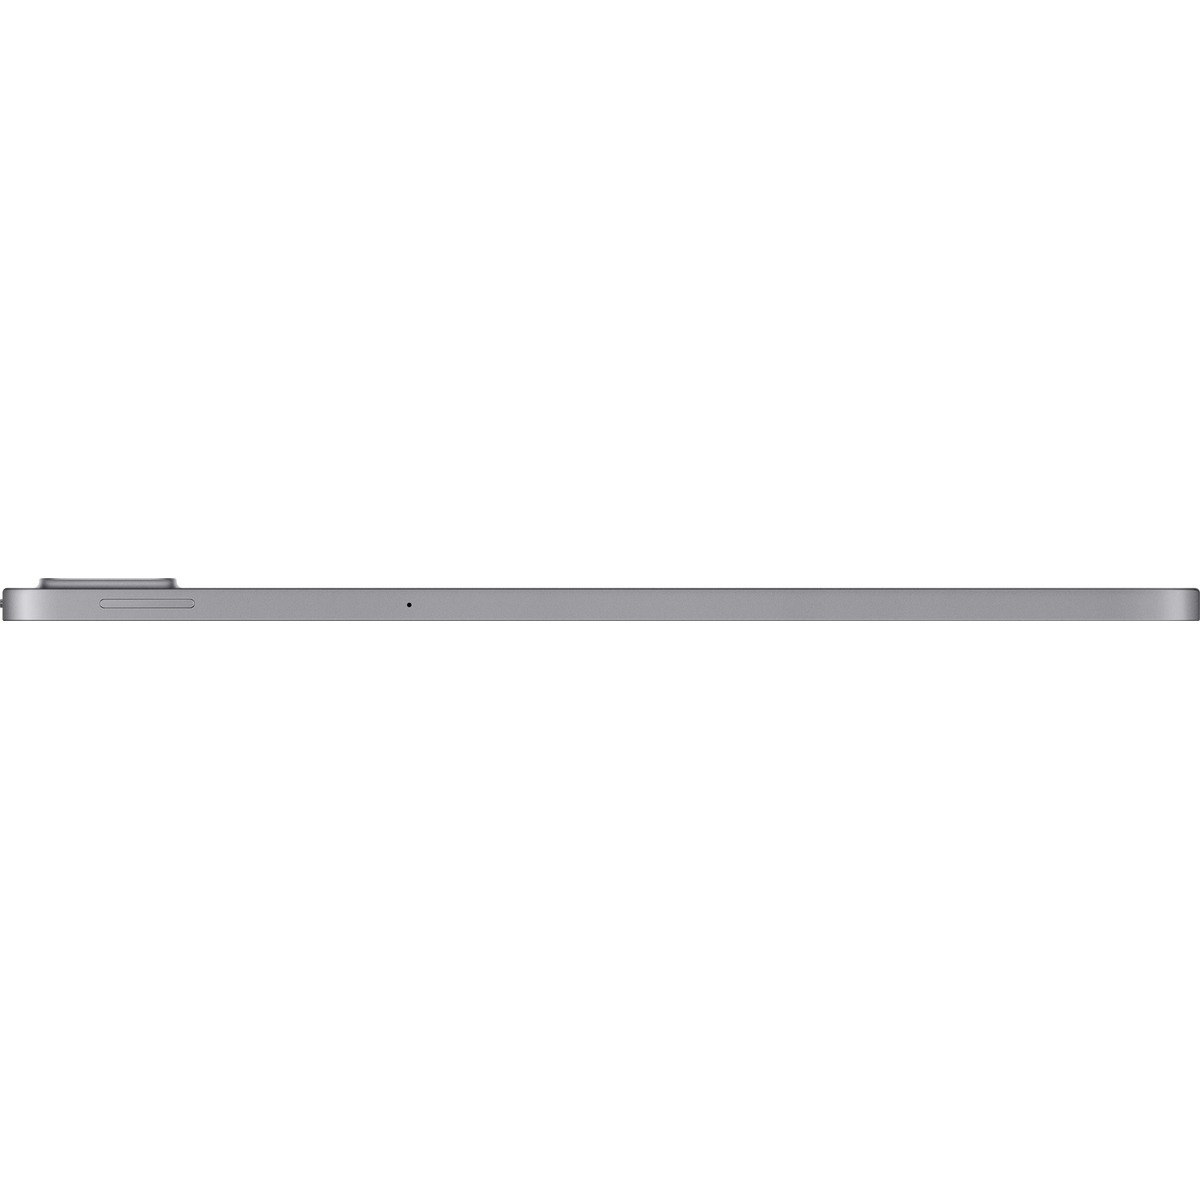 Планшет Huawei MatePad SE 11 8/128Gb Wi-Fi + стилус (Цвет: Nebula Gray)